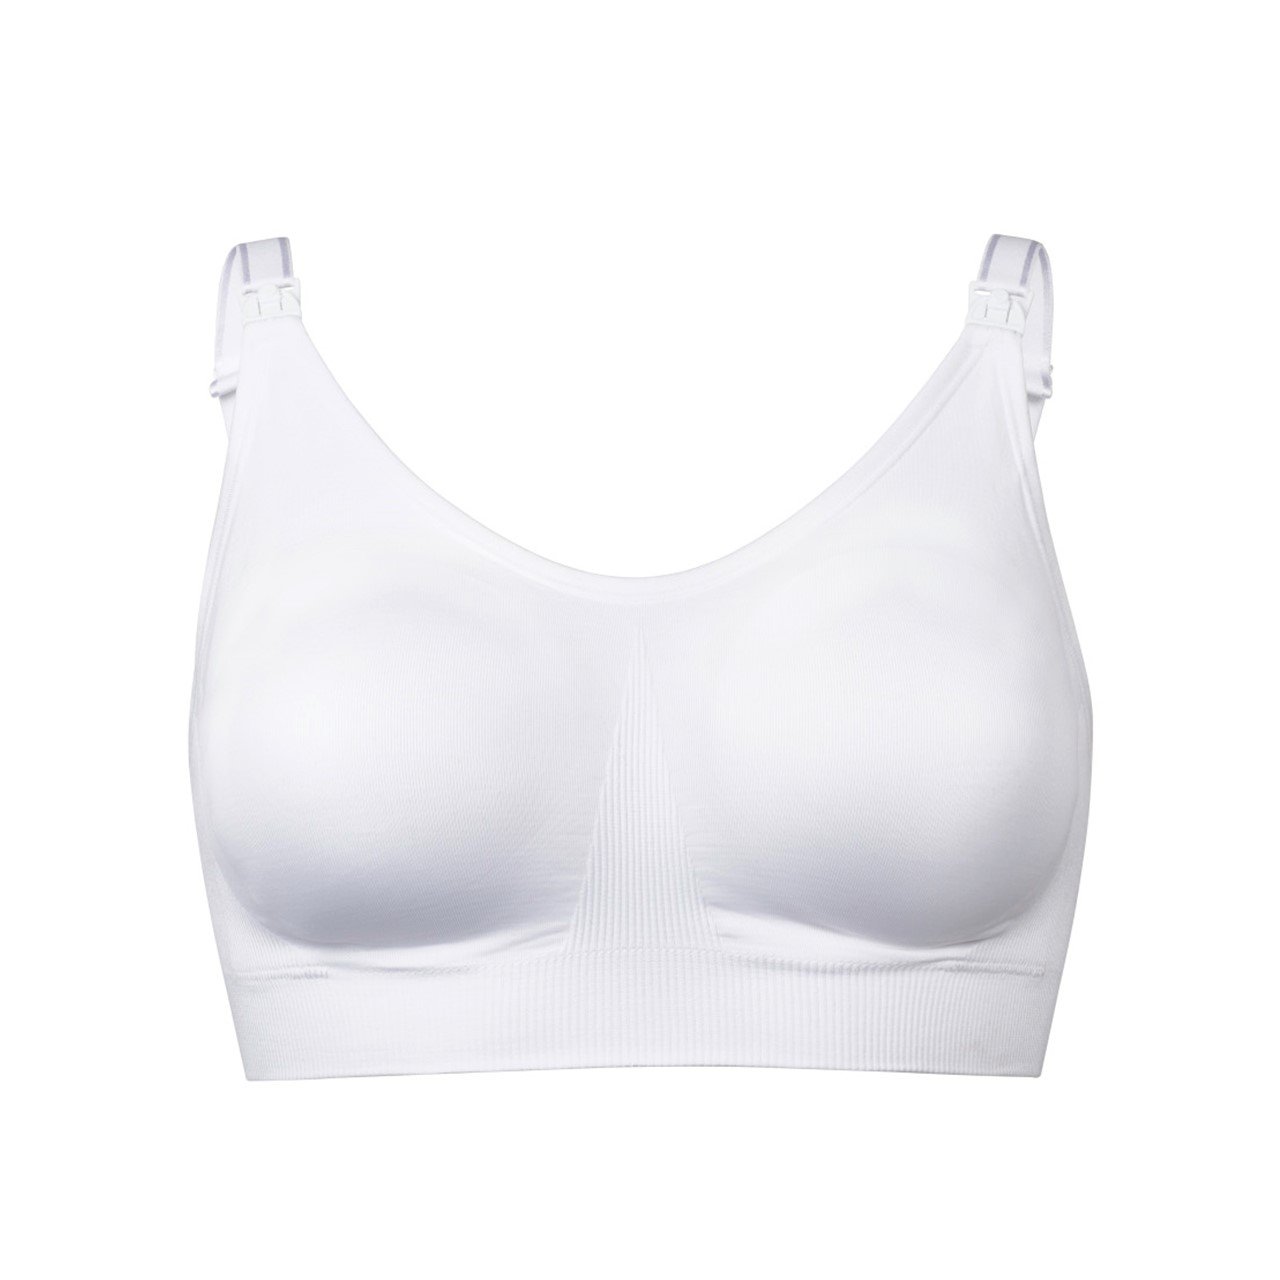 https://static.beautytocare.com/media/catalog/product/m/e/medela-ultimate-bodyfit-bra-white-extra-large-size-x1.jpg